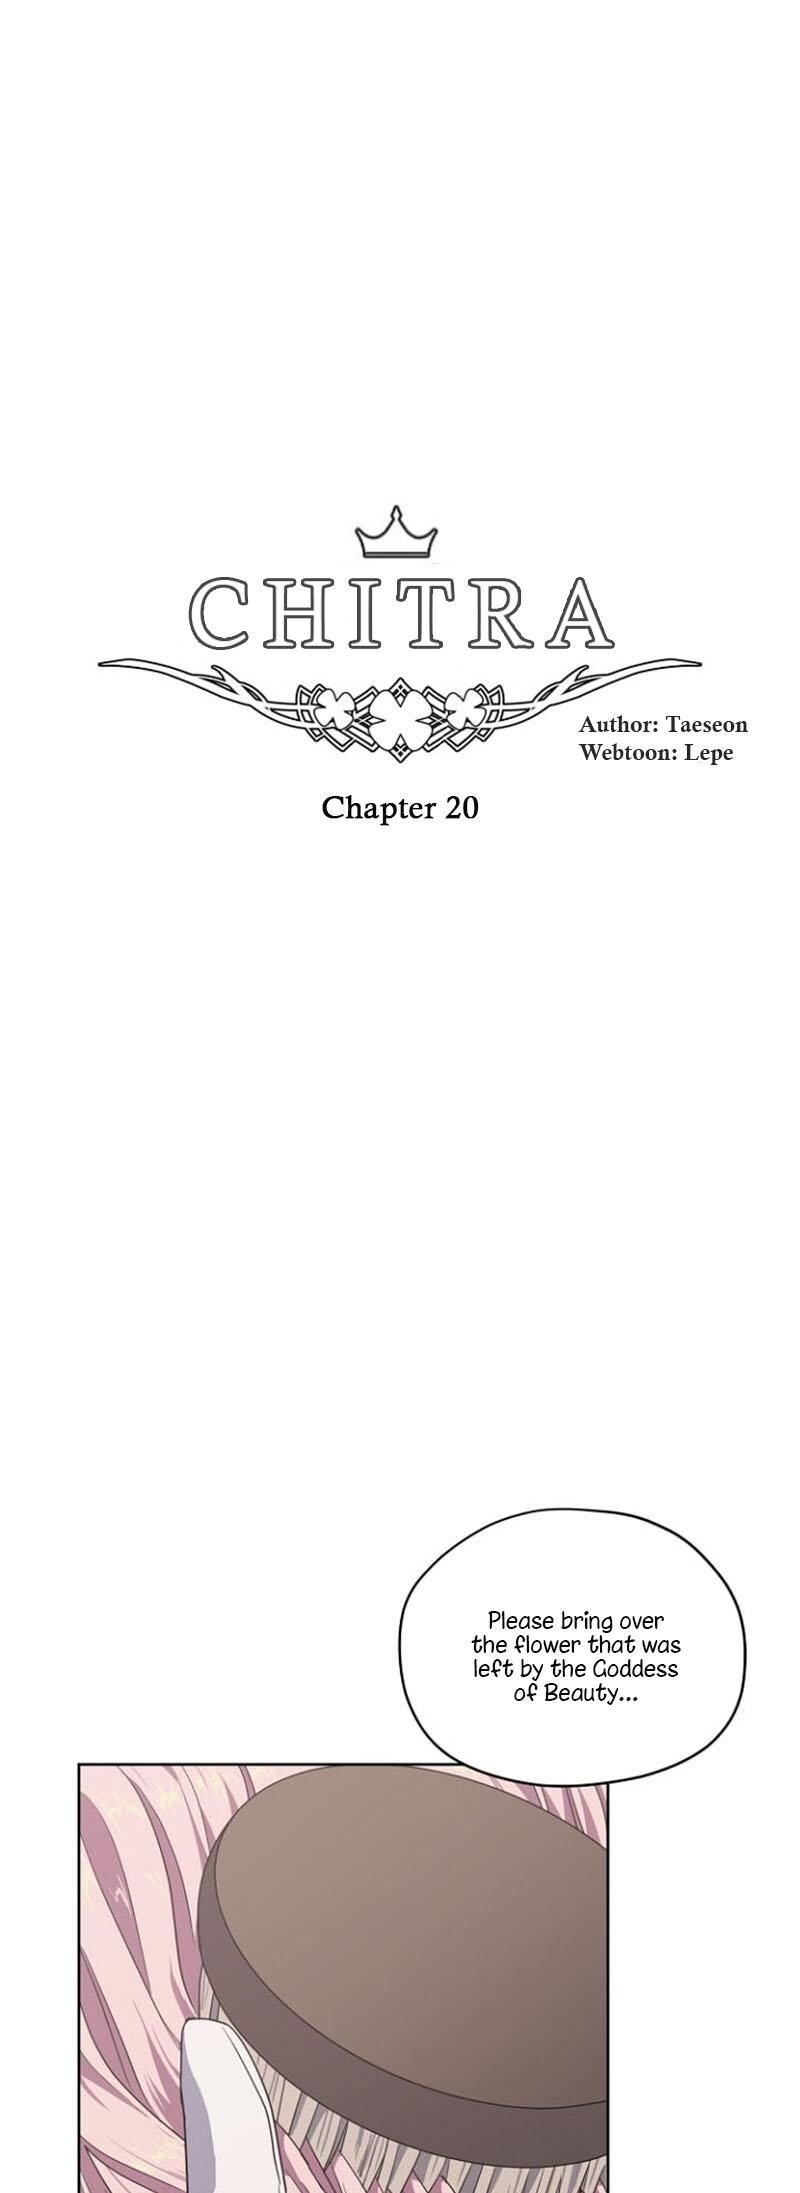 Chitra chapter 20